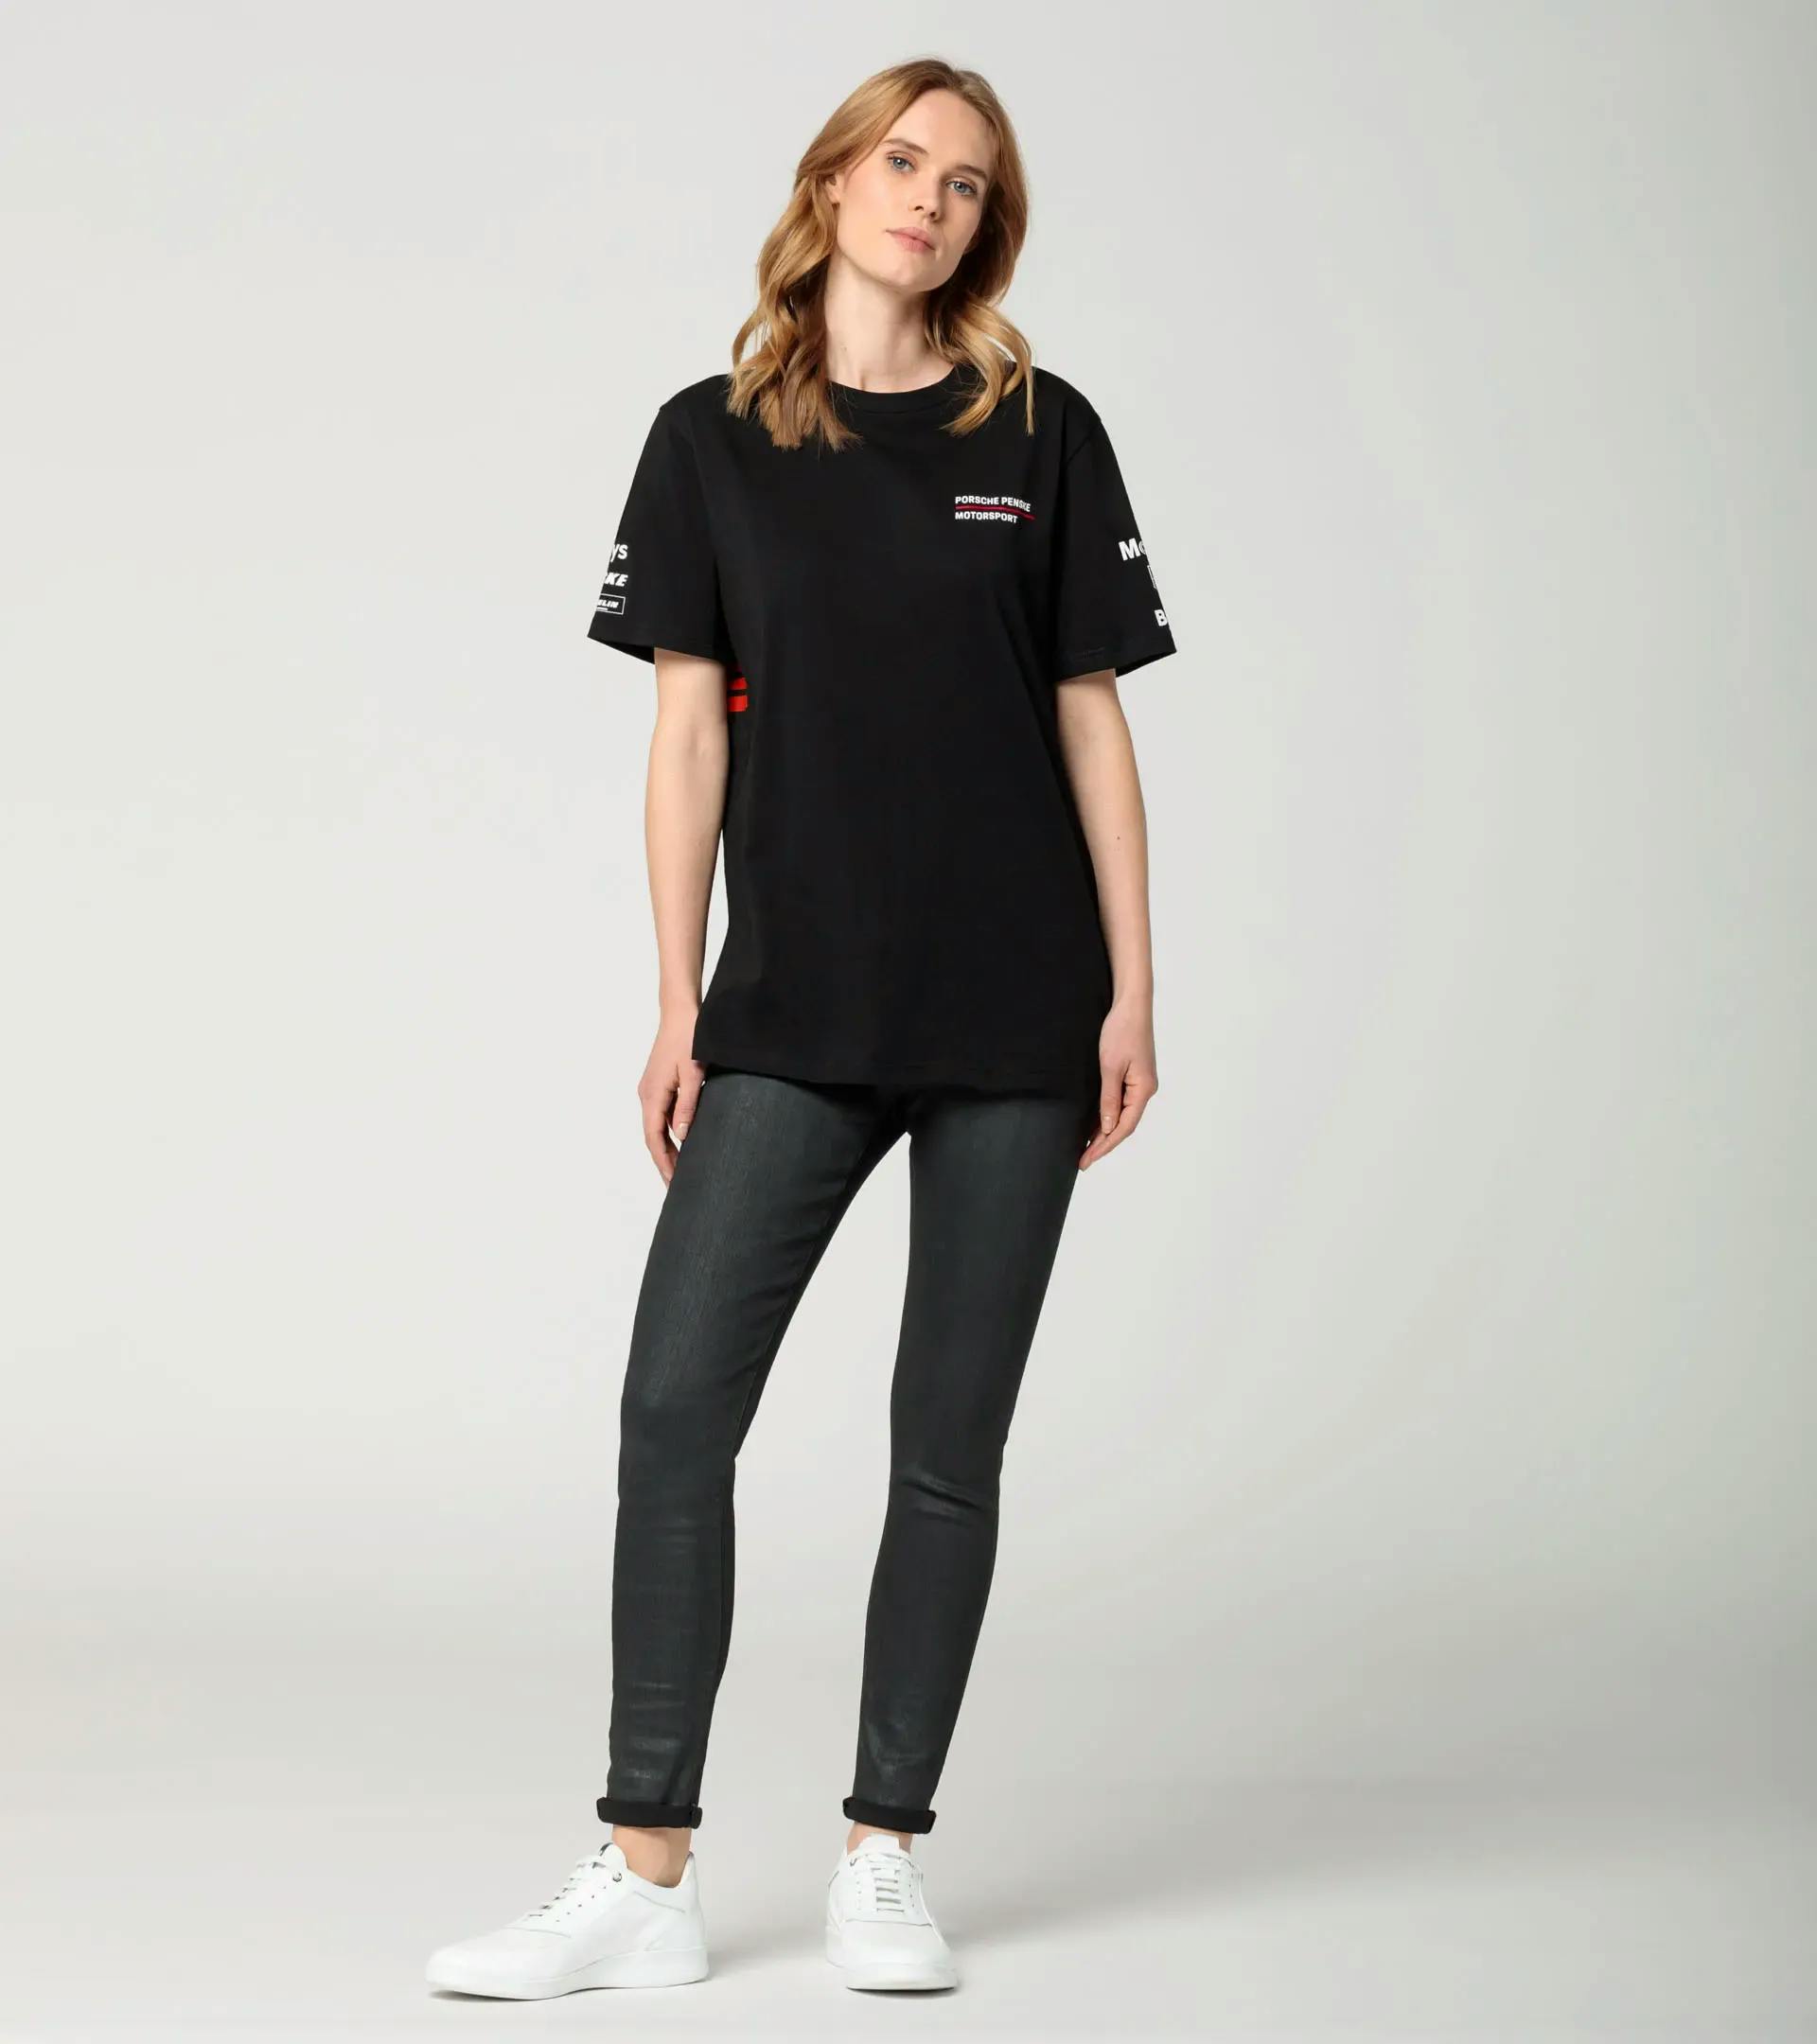 T-shirt unisex – Porsche Penske Motorsport 7